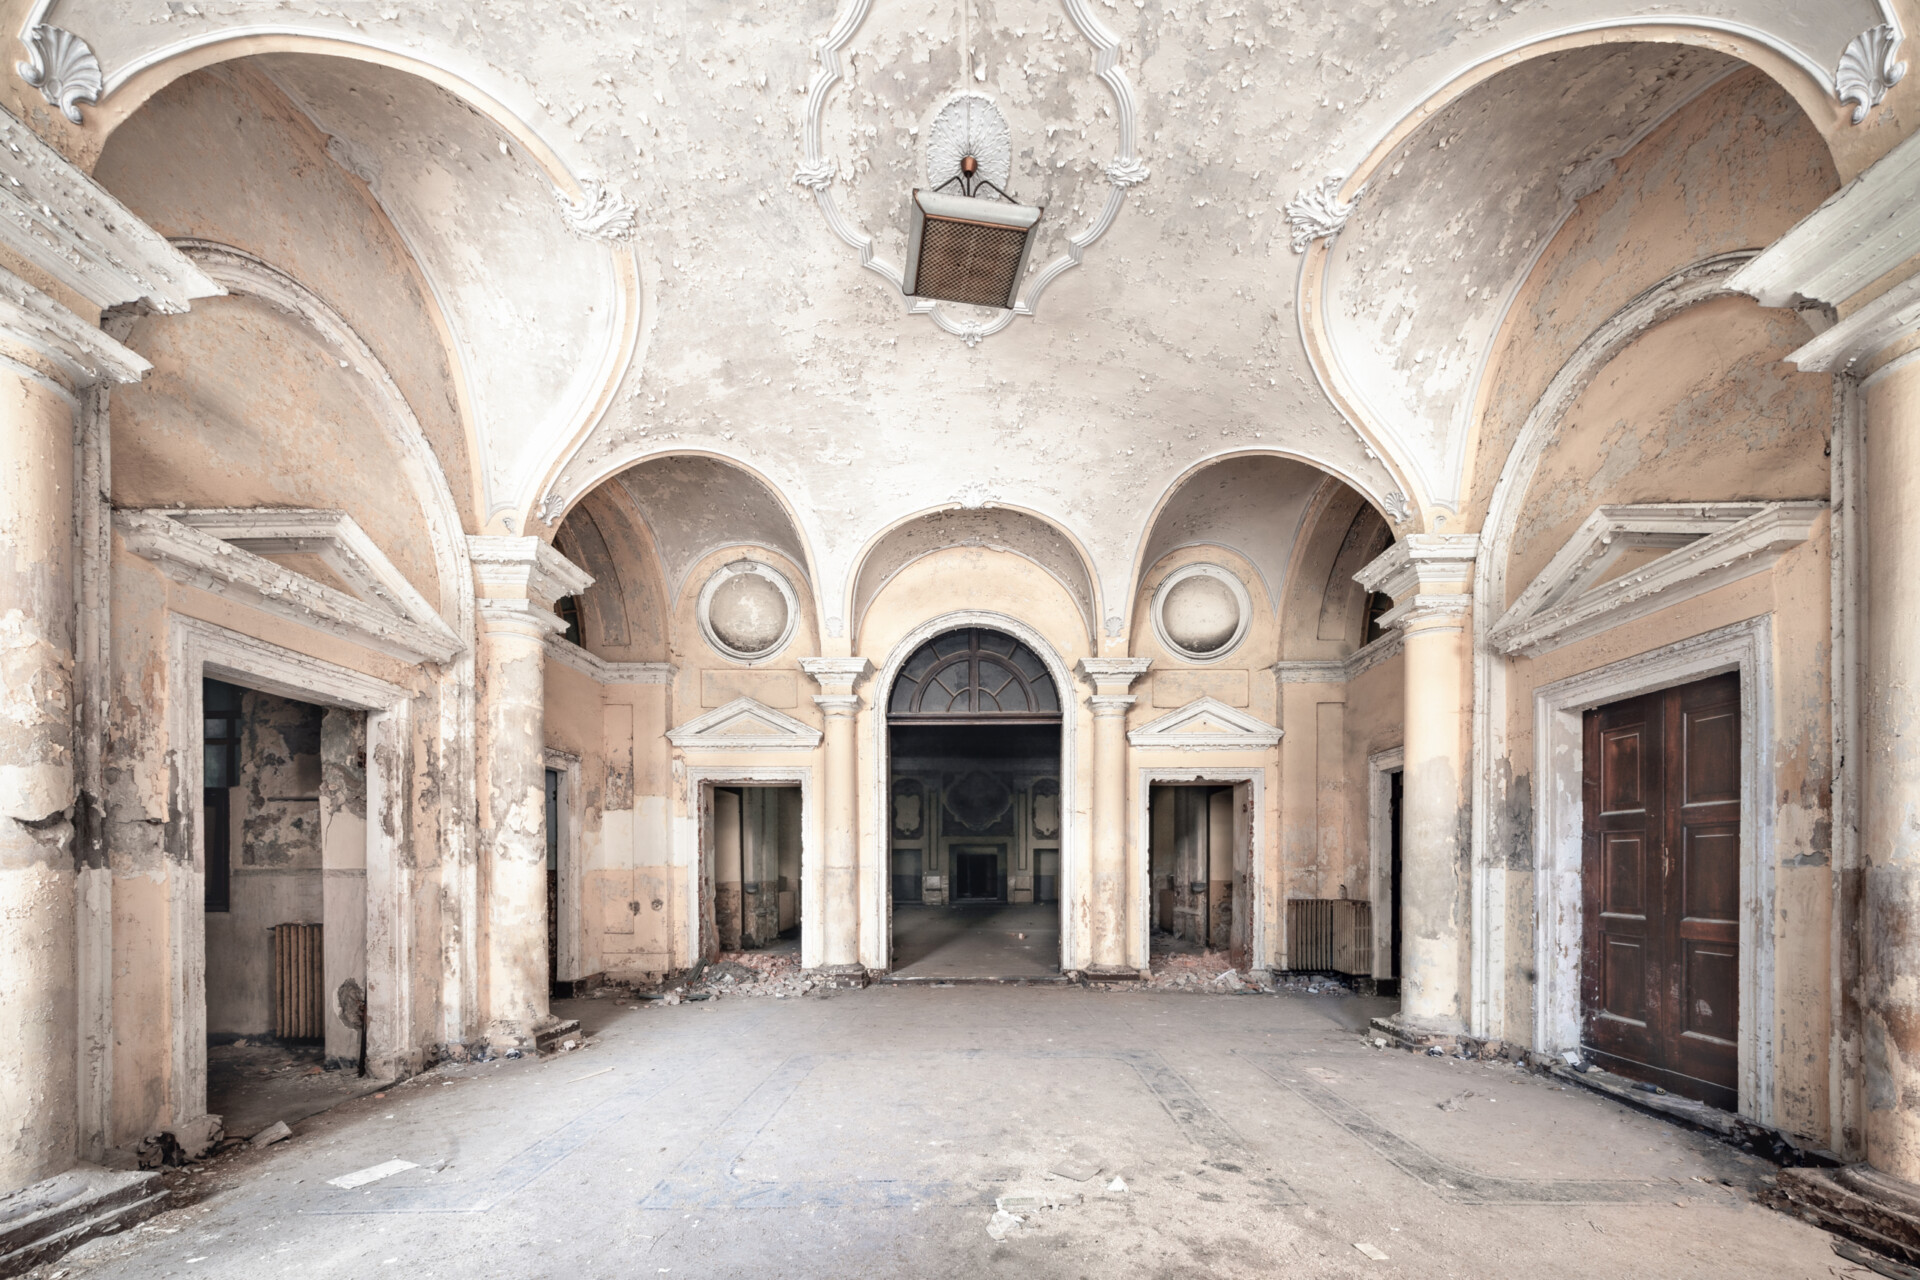 Fabbrica delle idee - Abandoned Psychiatric Hospital in Italy